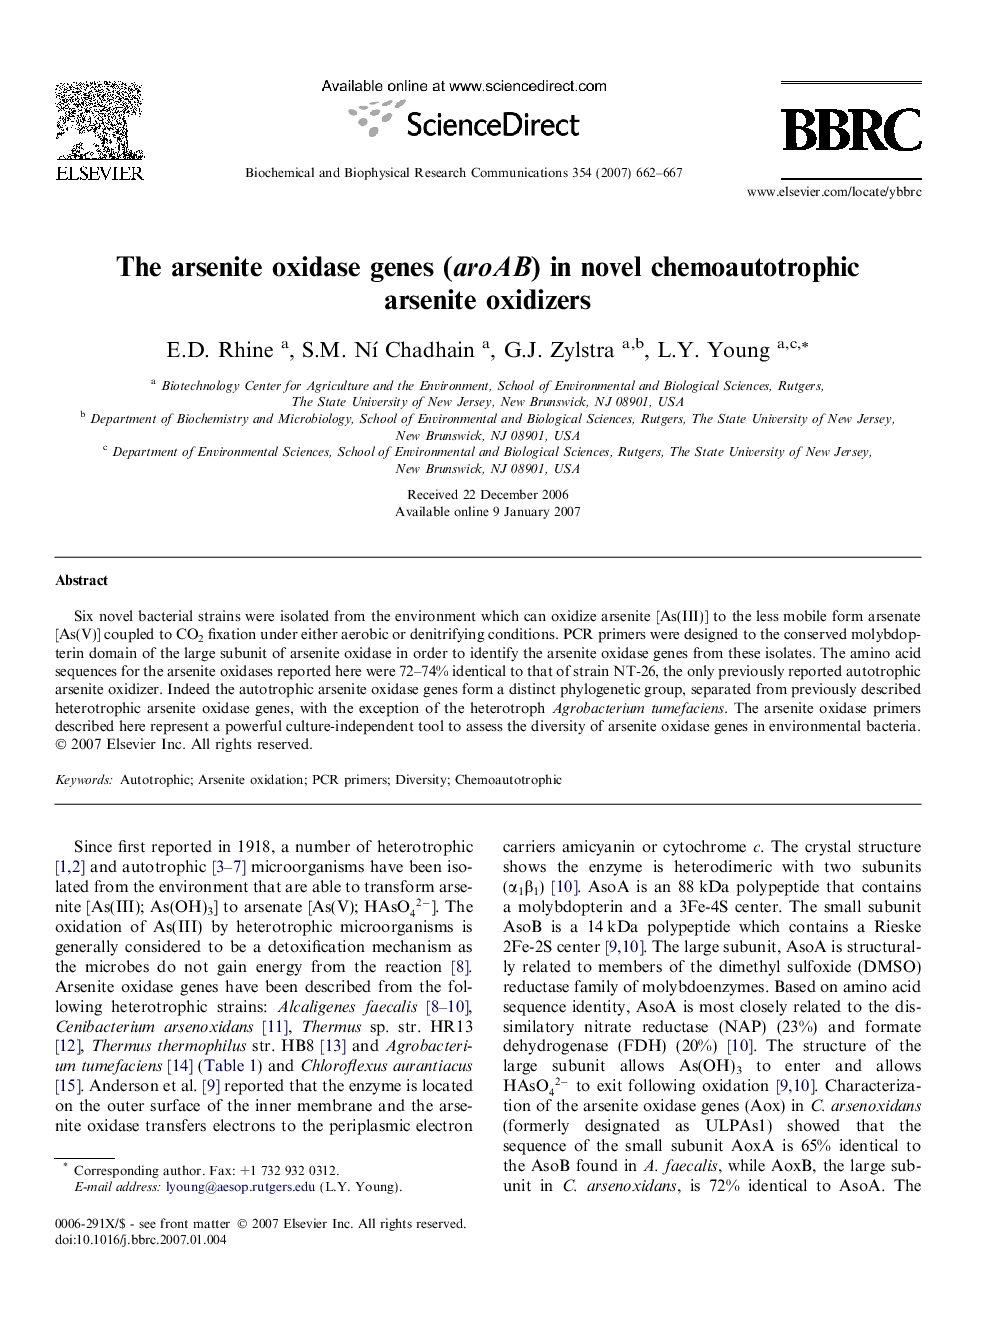 The arsenite oxidase genes (aroAB) in novel chemoautotrophic arsenite oxidizers